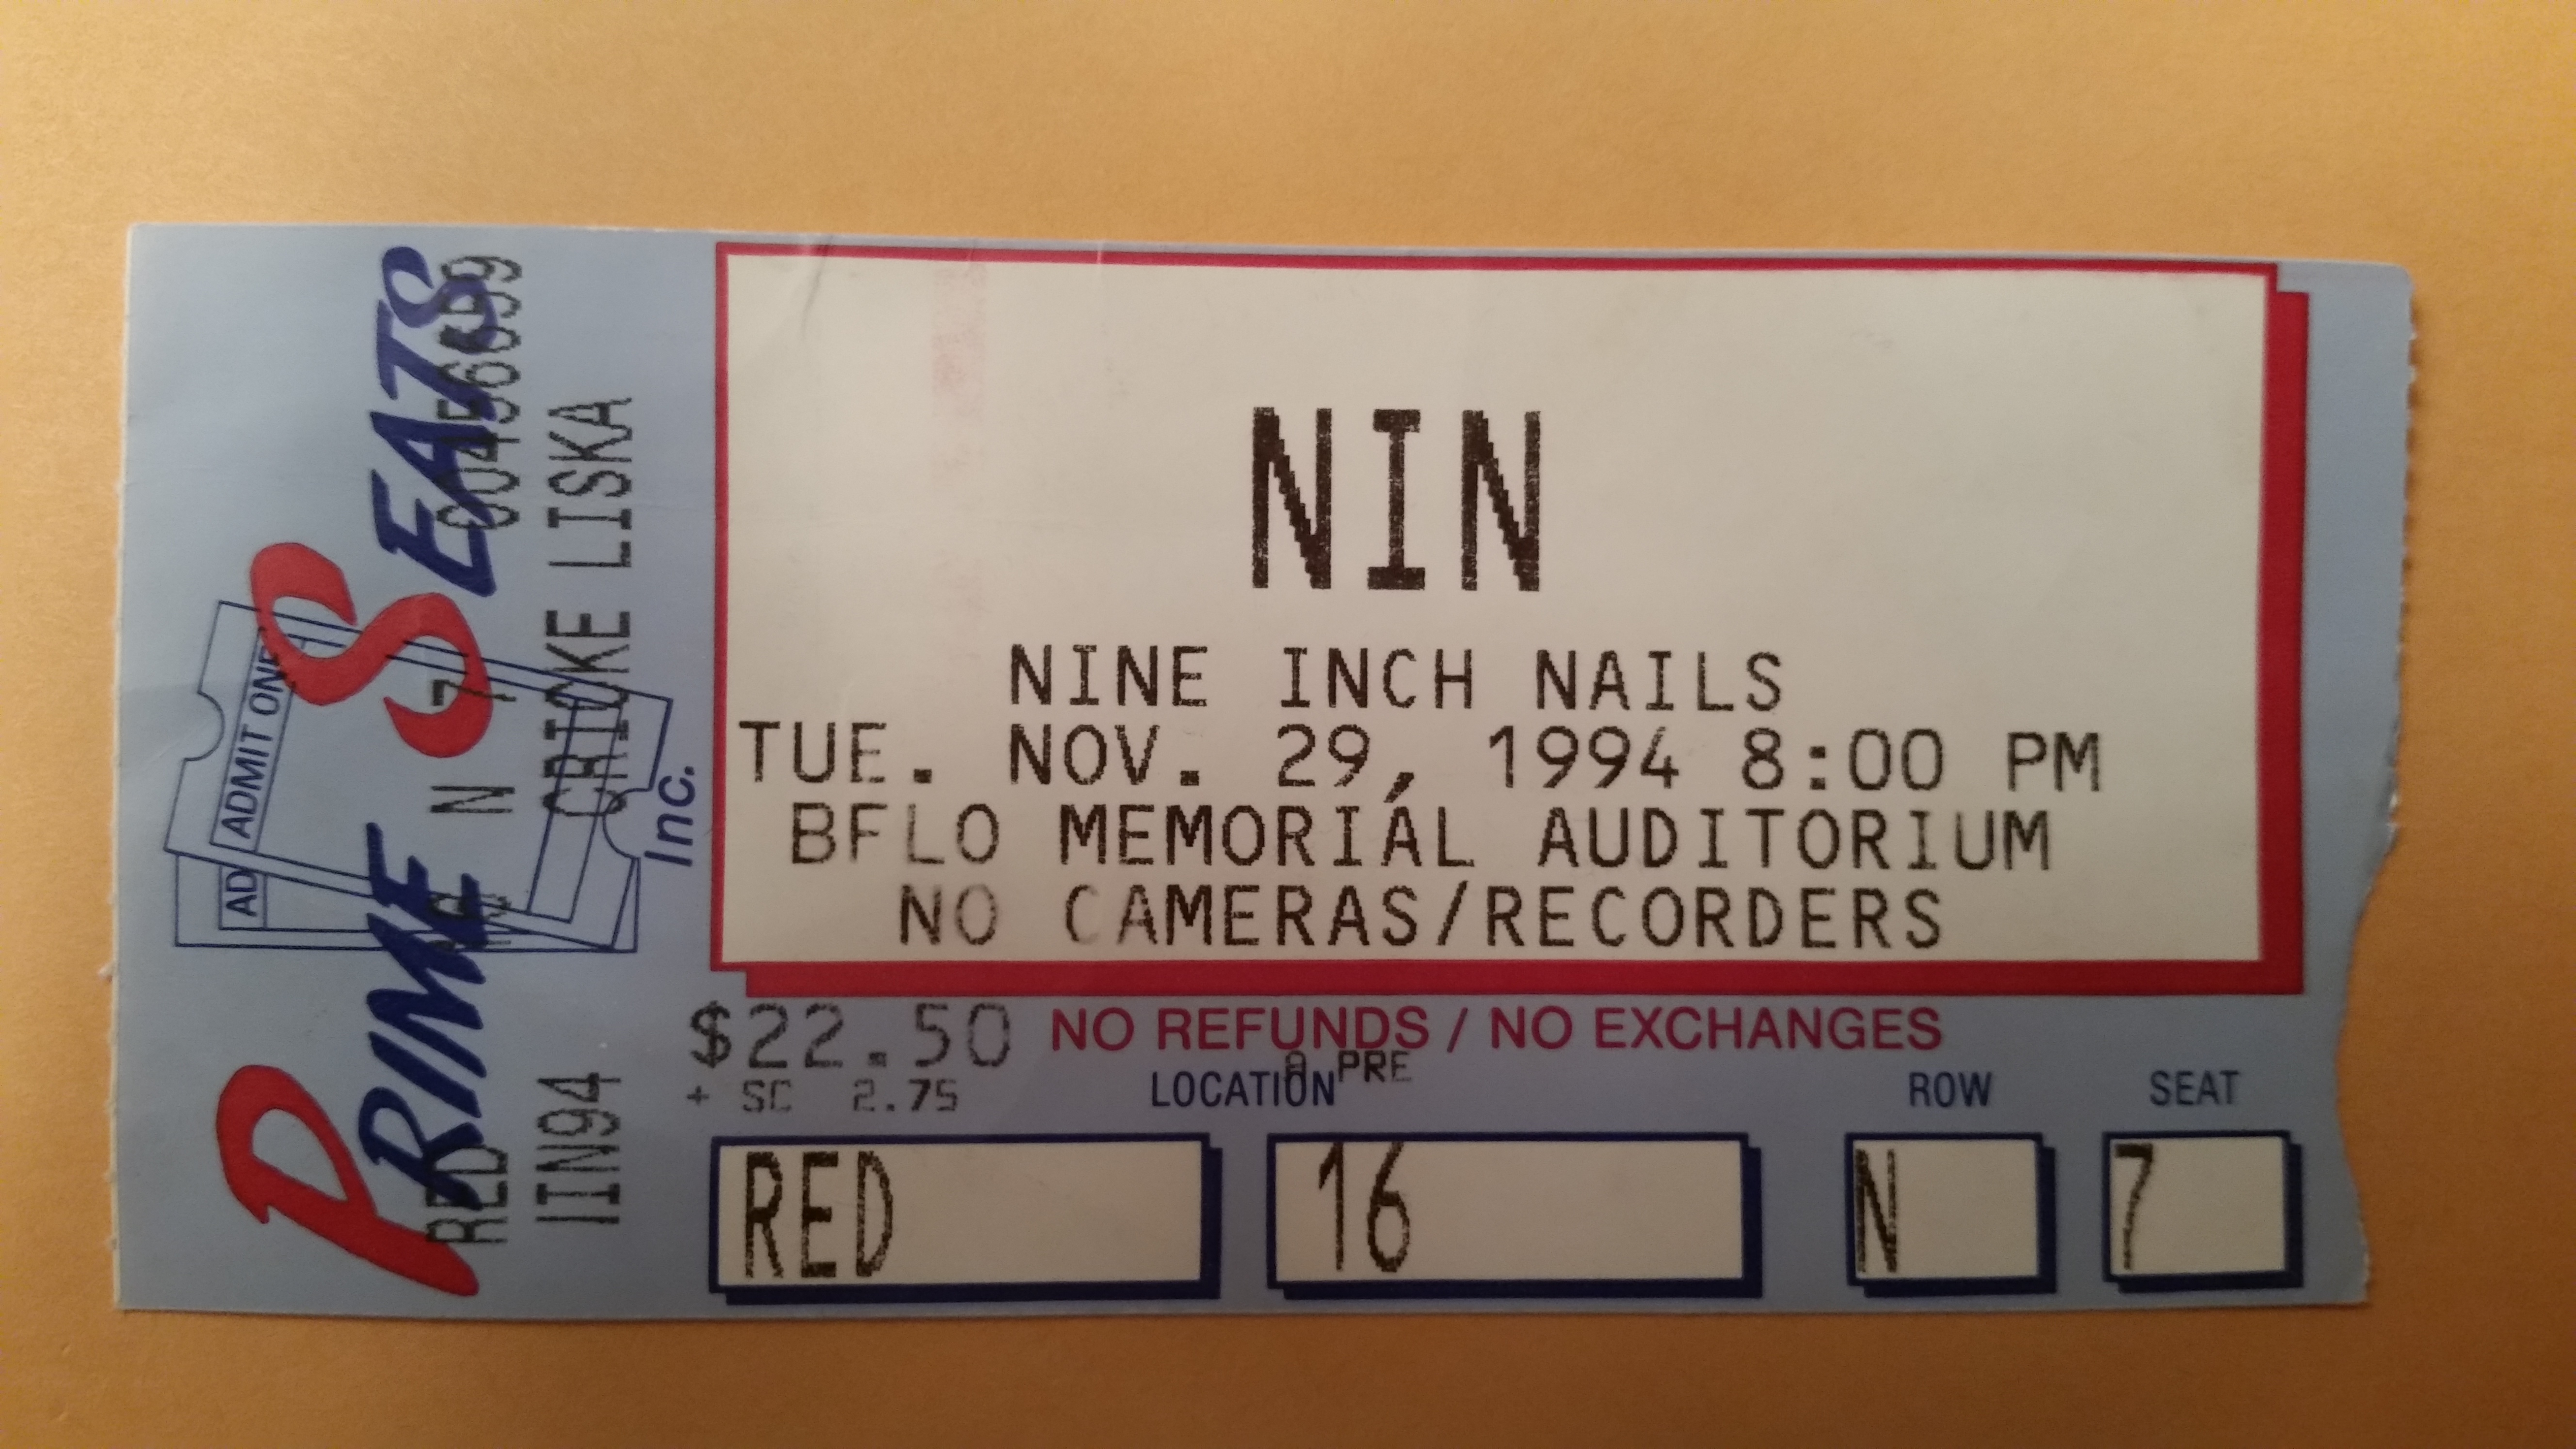 1994/11/29 Ticket